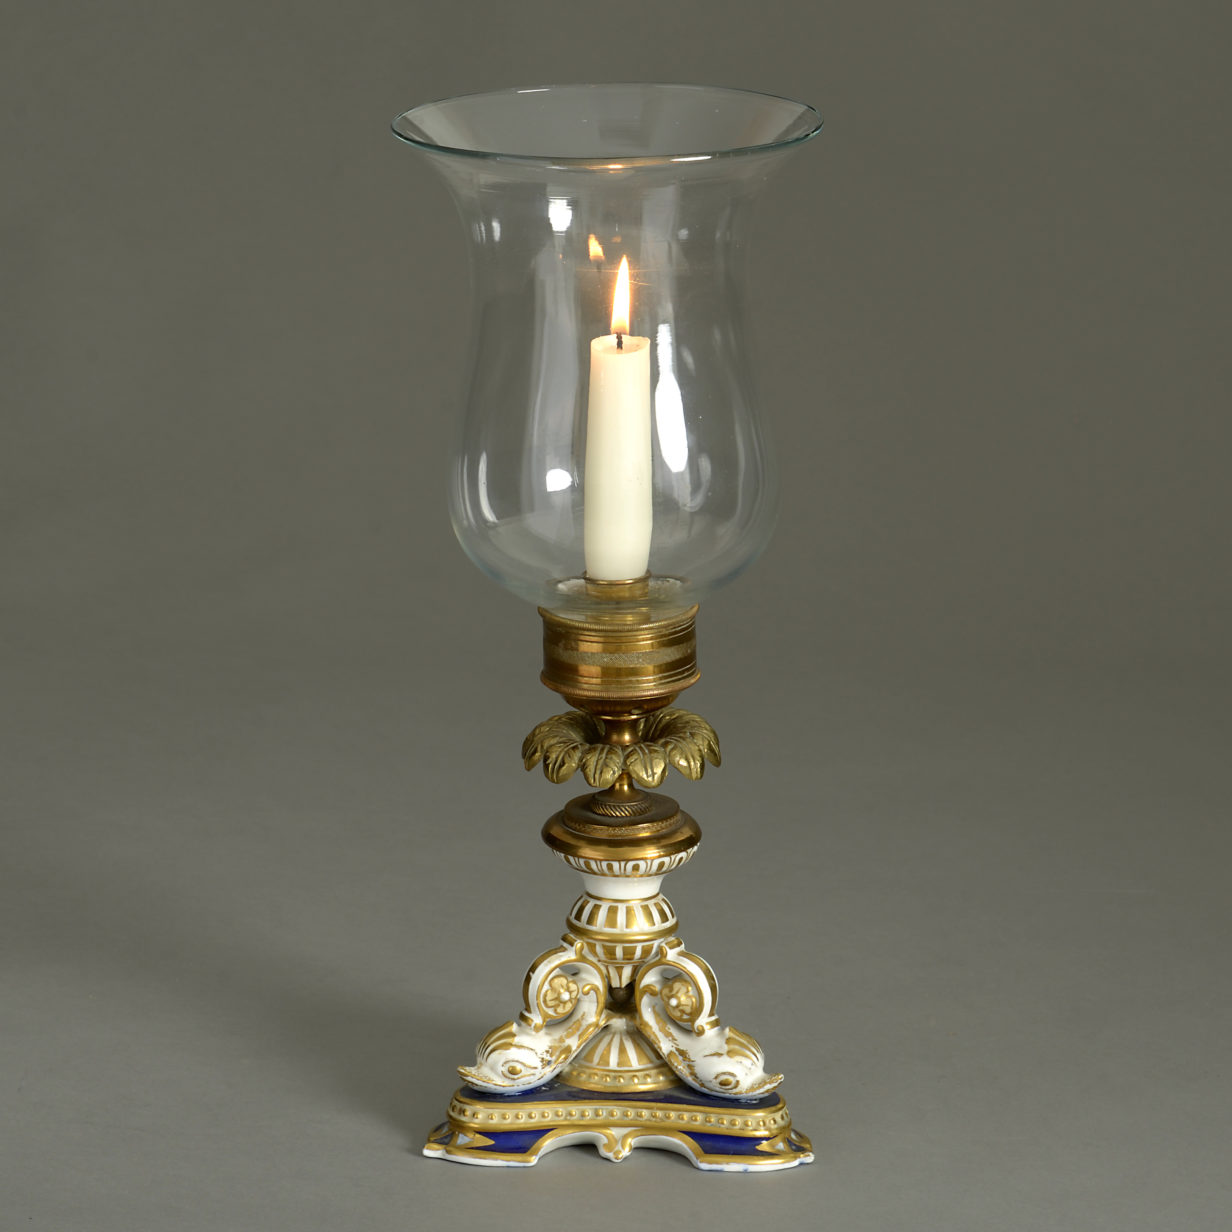 A regency style porcelain storm lantern